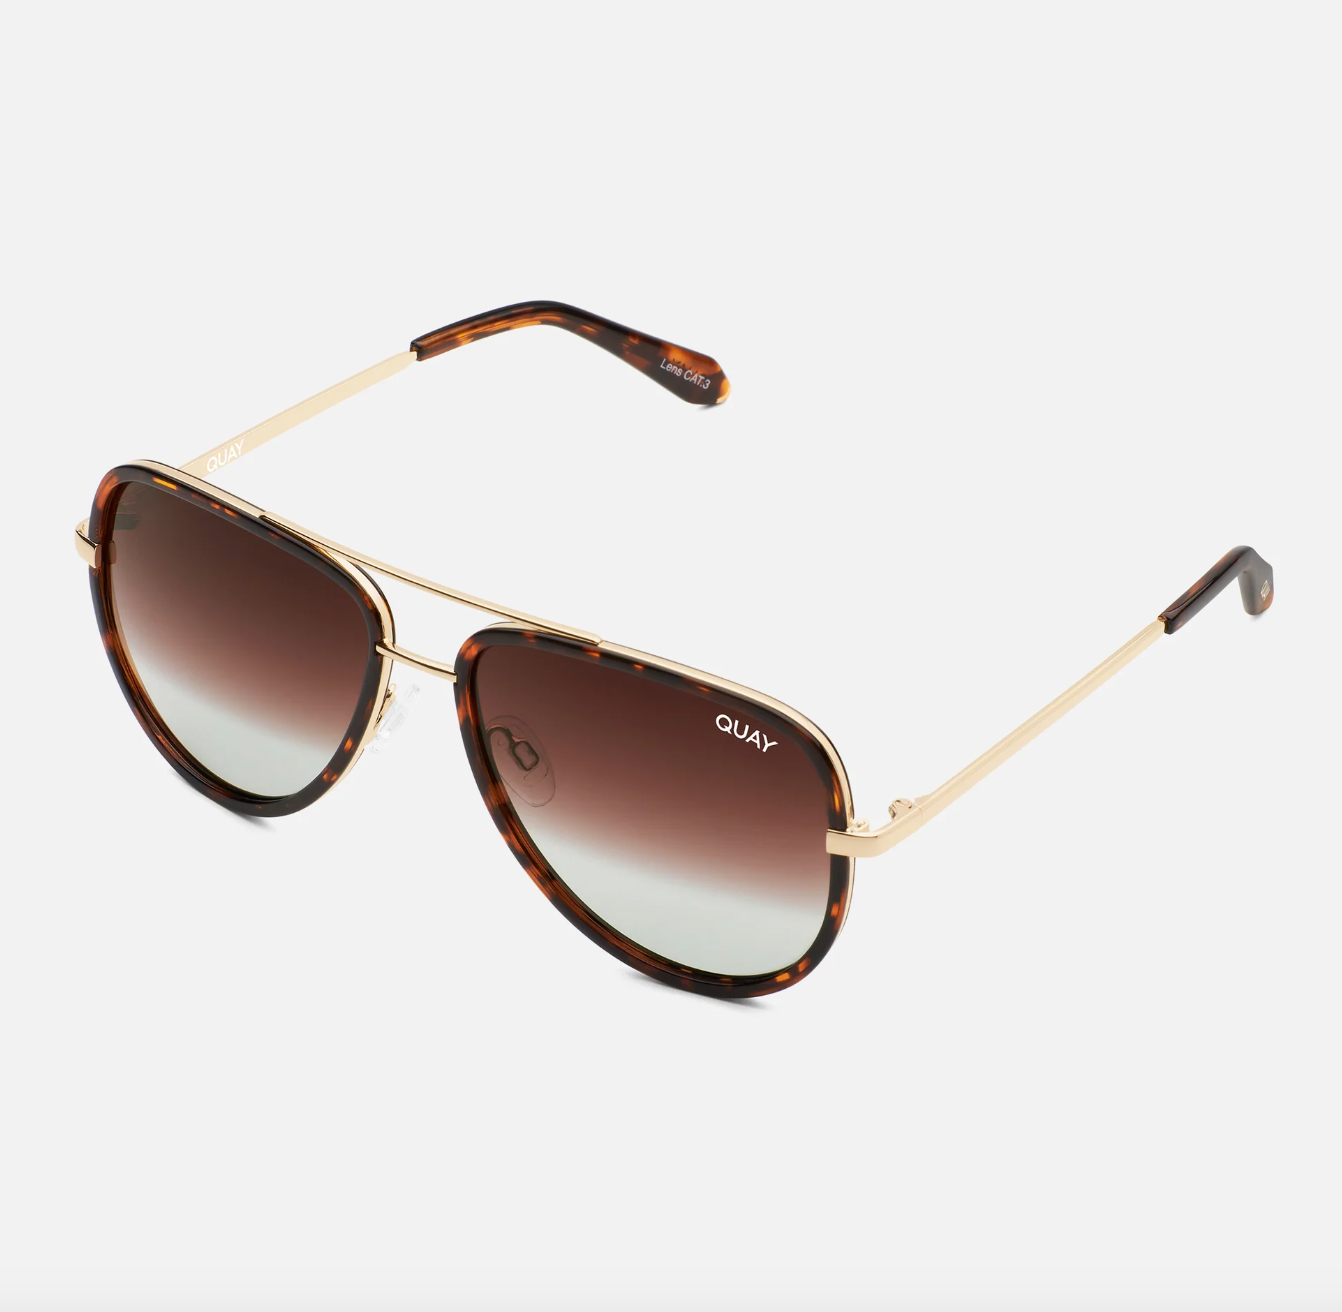 All In Mini Sunglasses-Tortoise/Brown